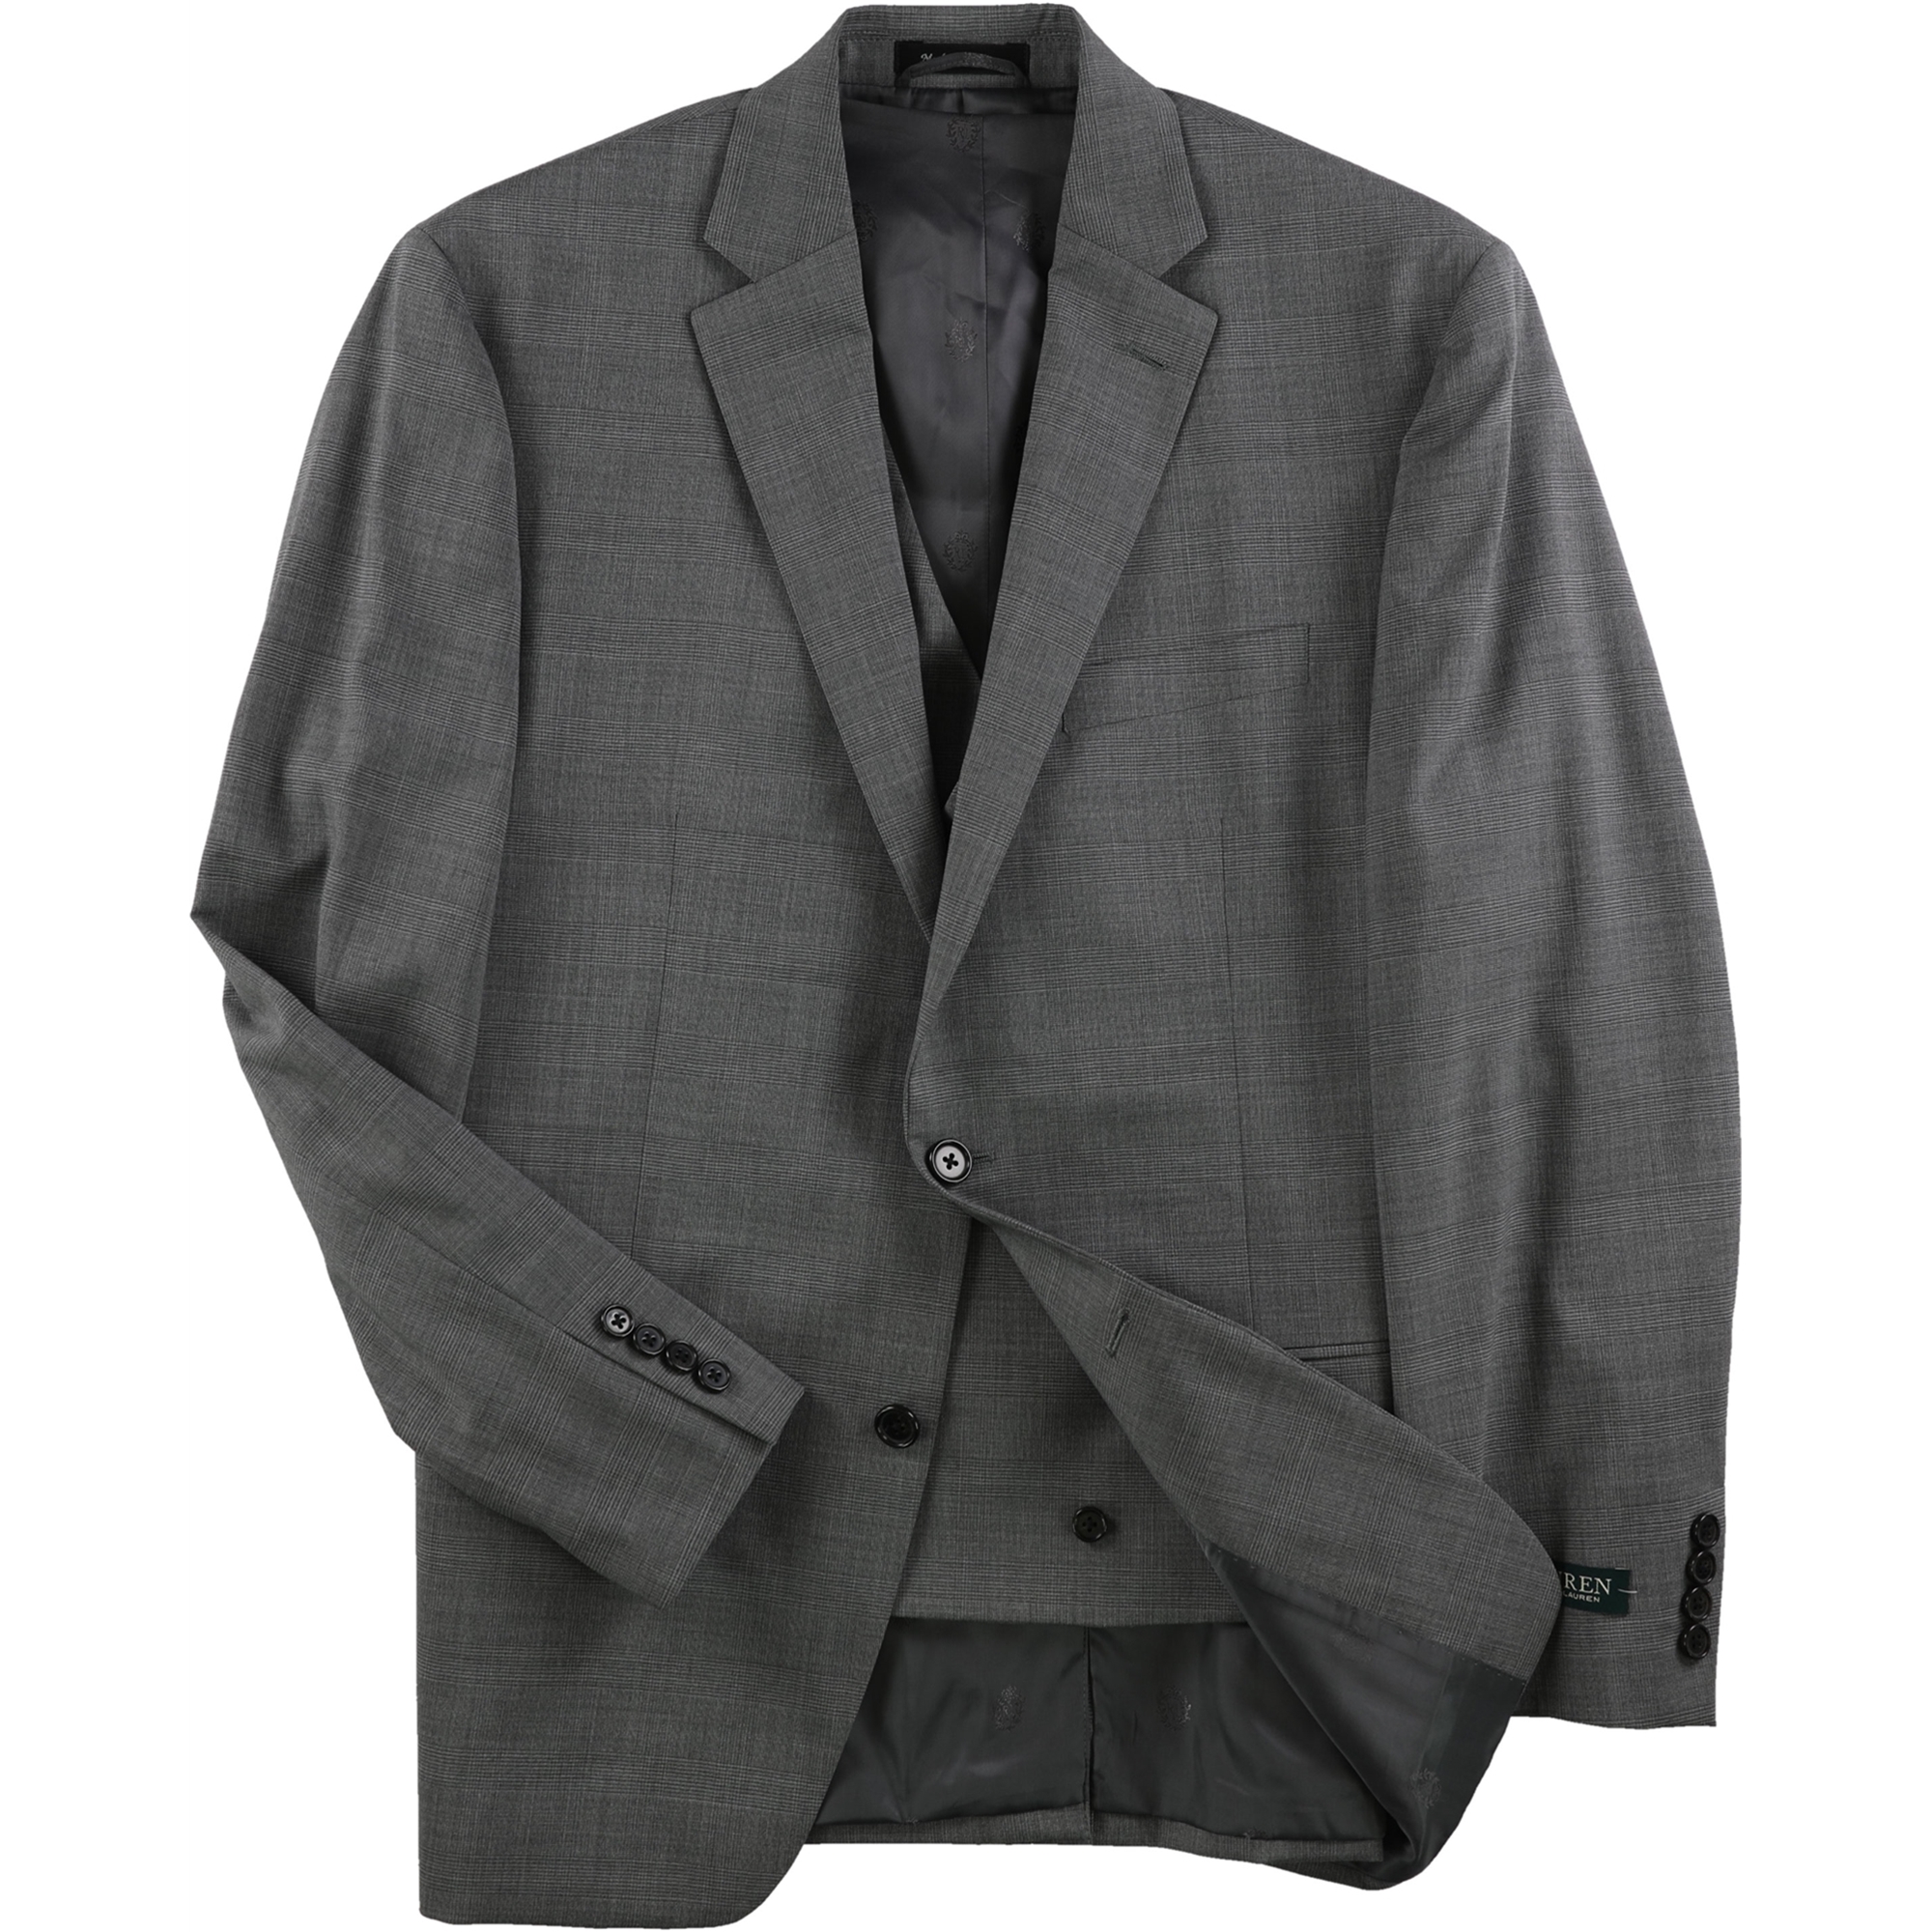 Ralph Lauren Mens Plaid Two Button Formal Suit lightgrey 40/Unfinished - image 2 of 2